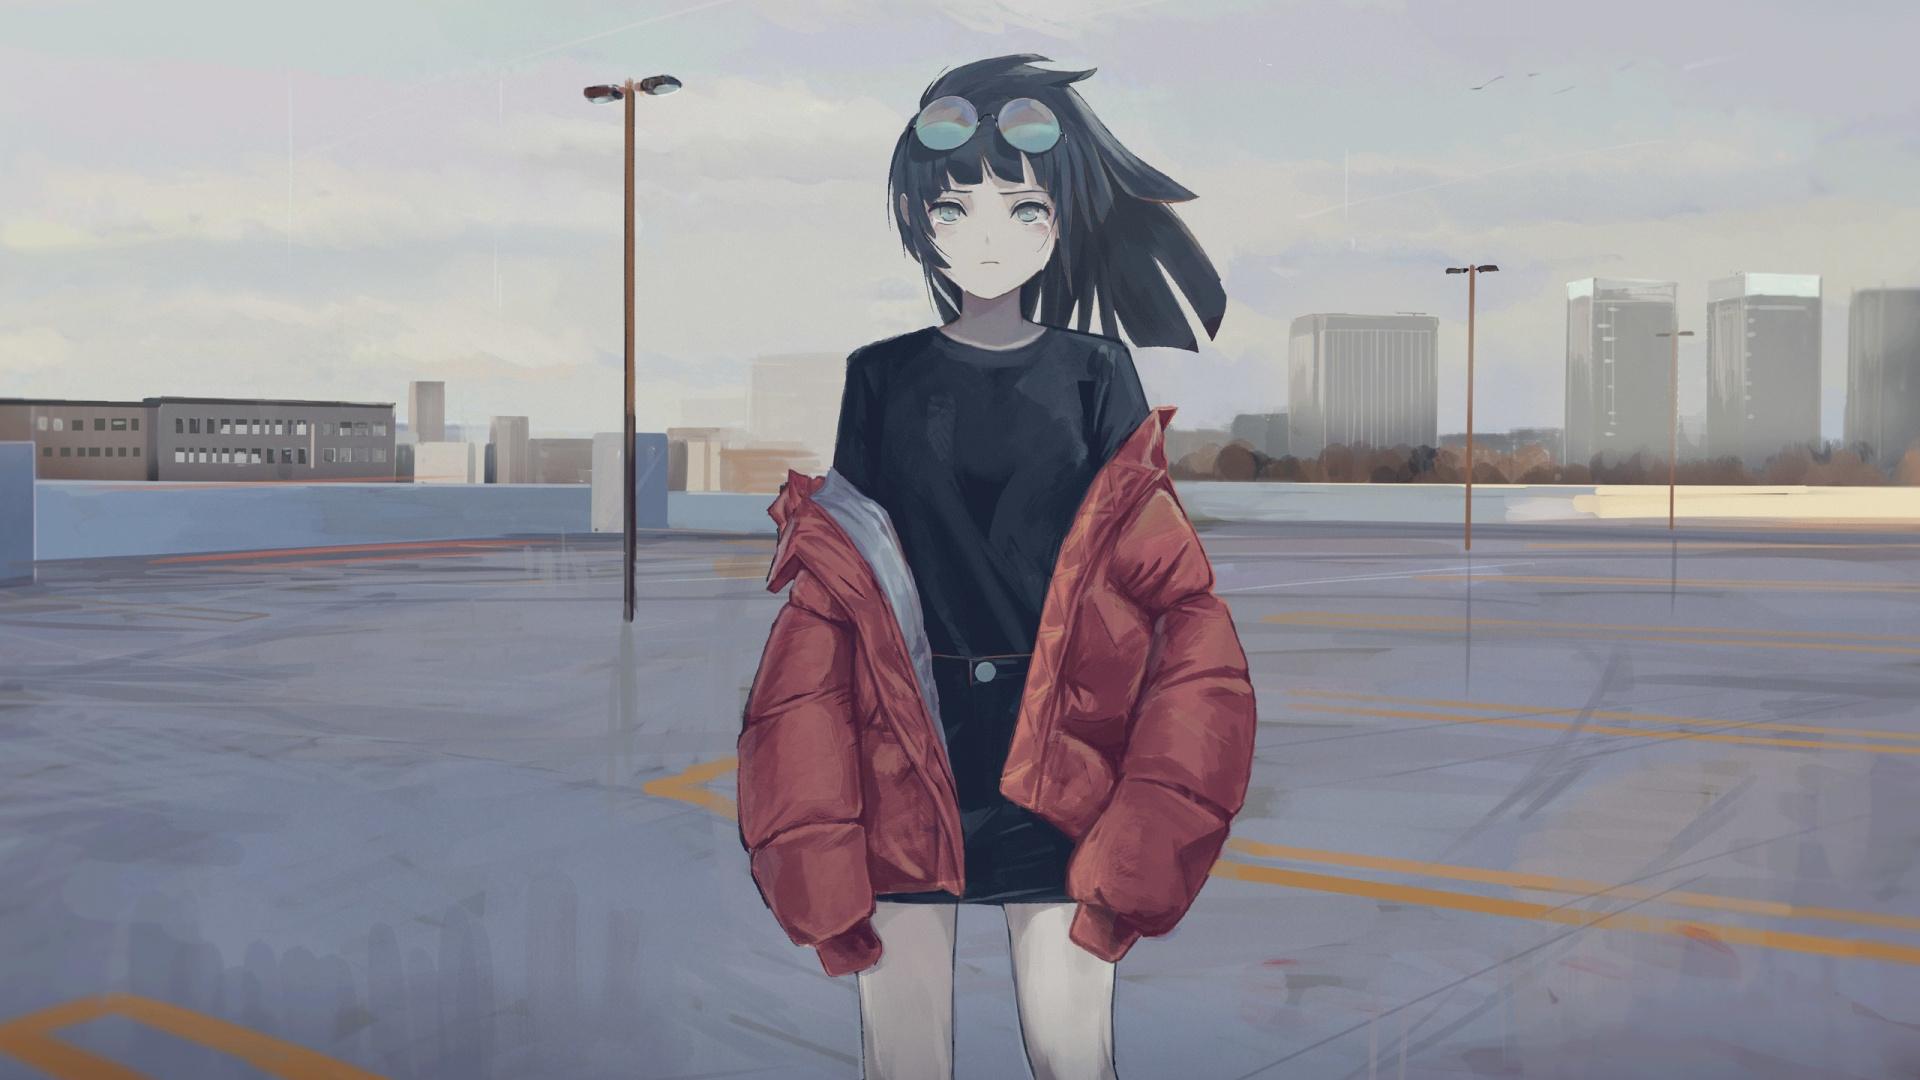 Download 1920x1080 wallpaper anime girl, art, jacket